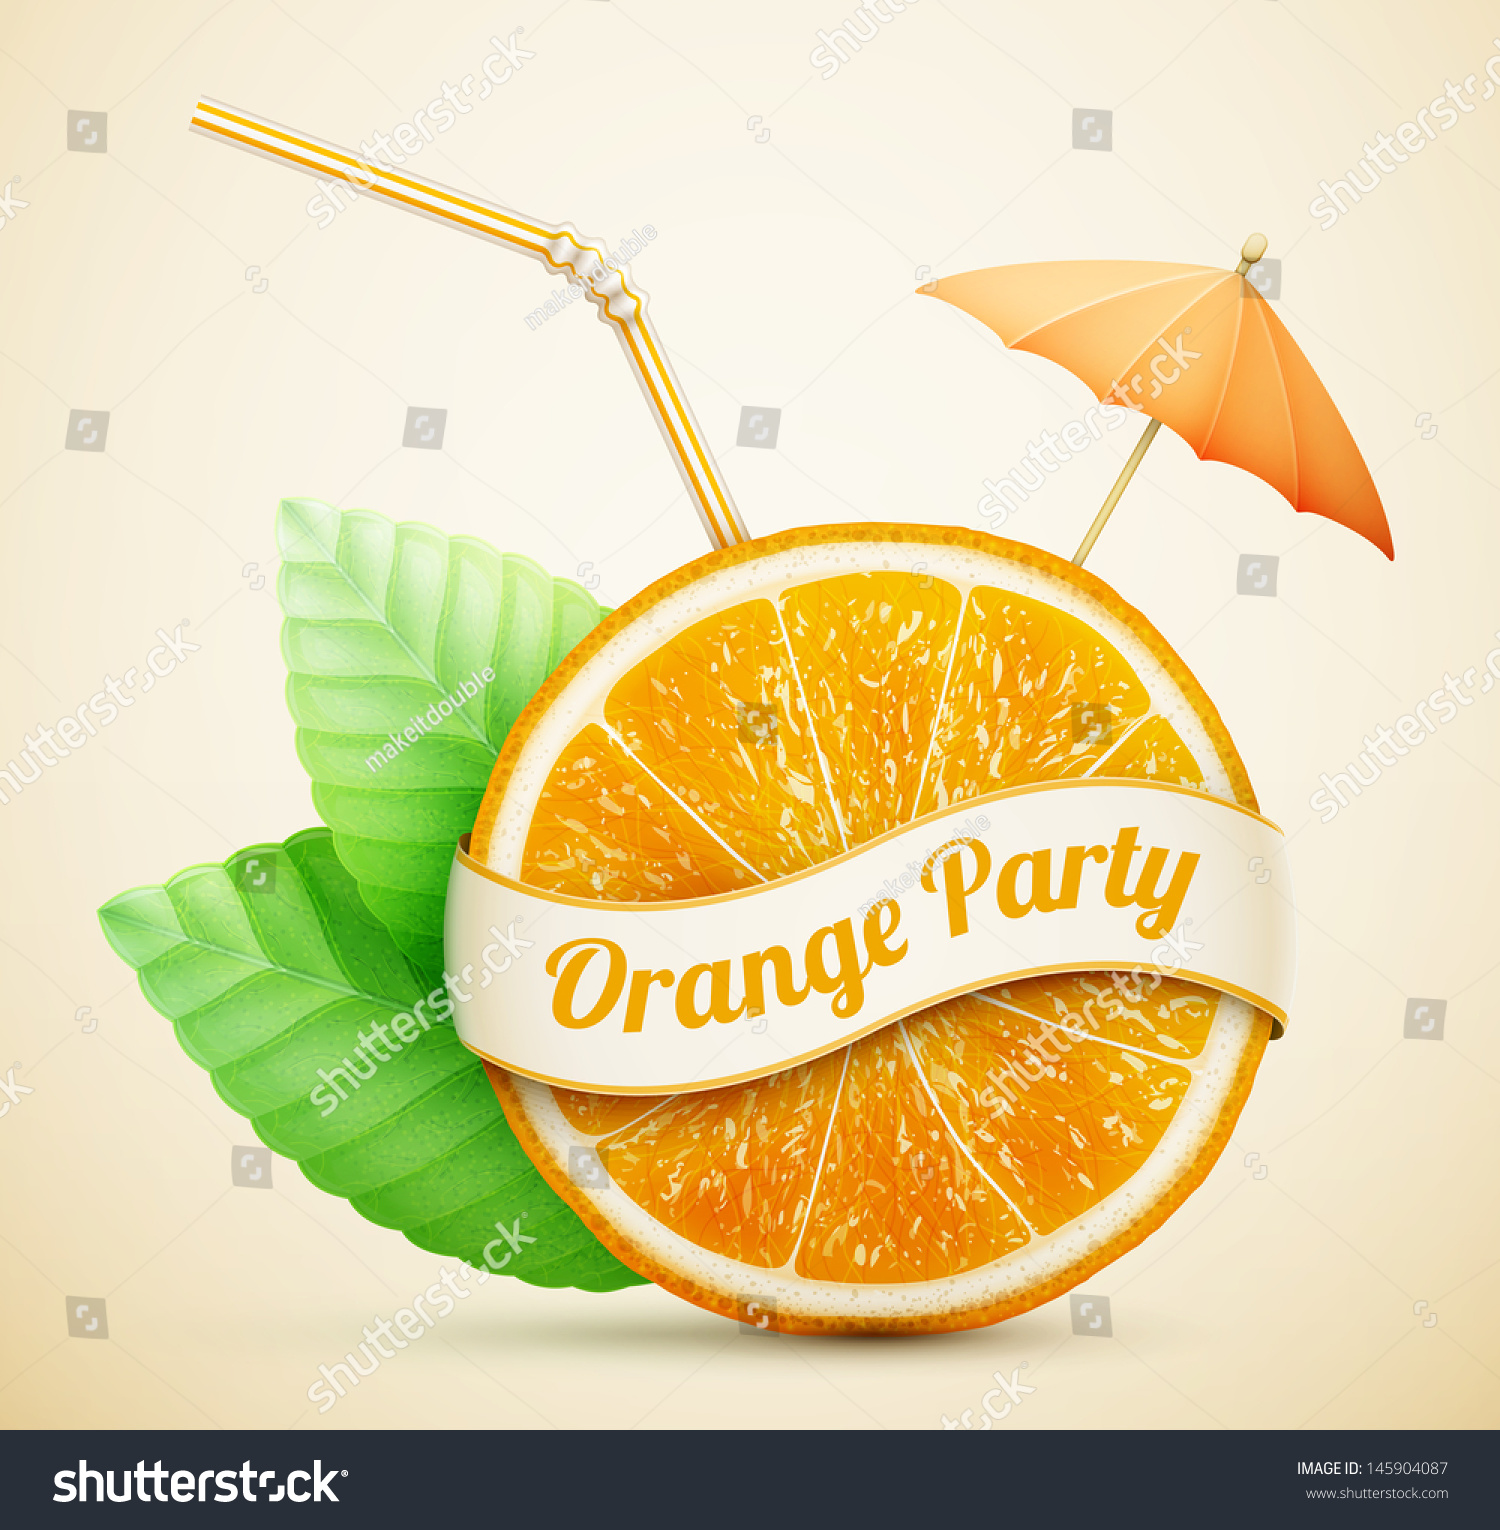 SVG of fresh orange with ribbon and cocktail stick eps10 vector illustration svg